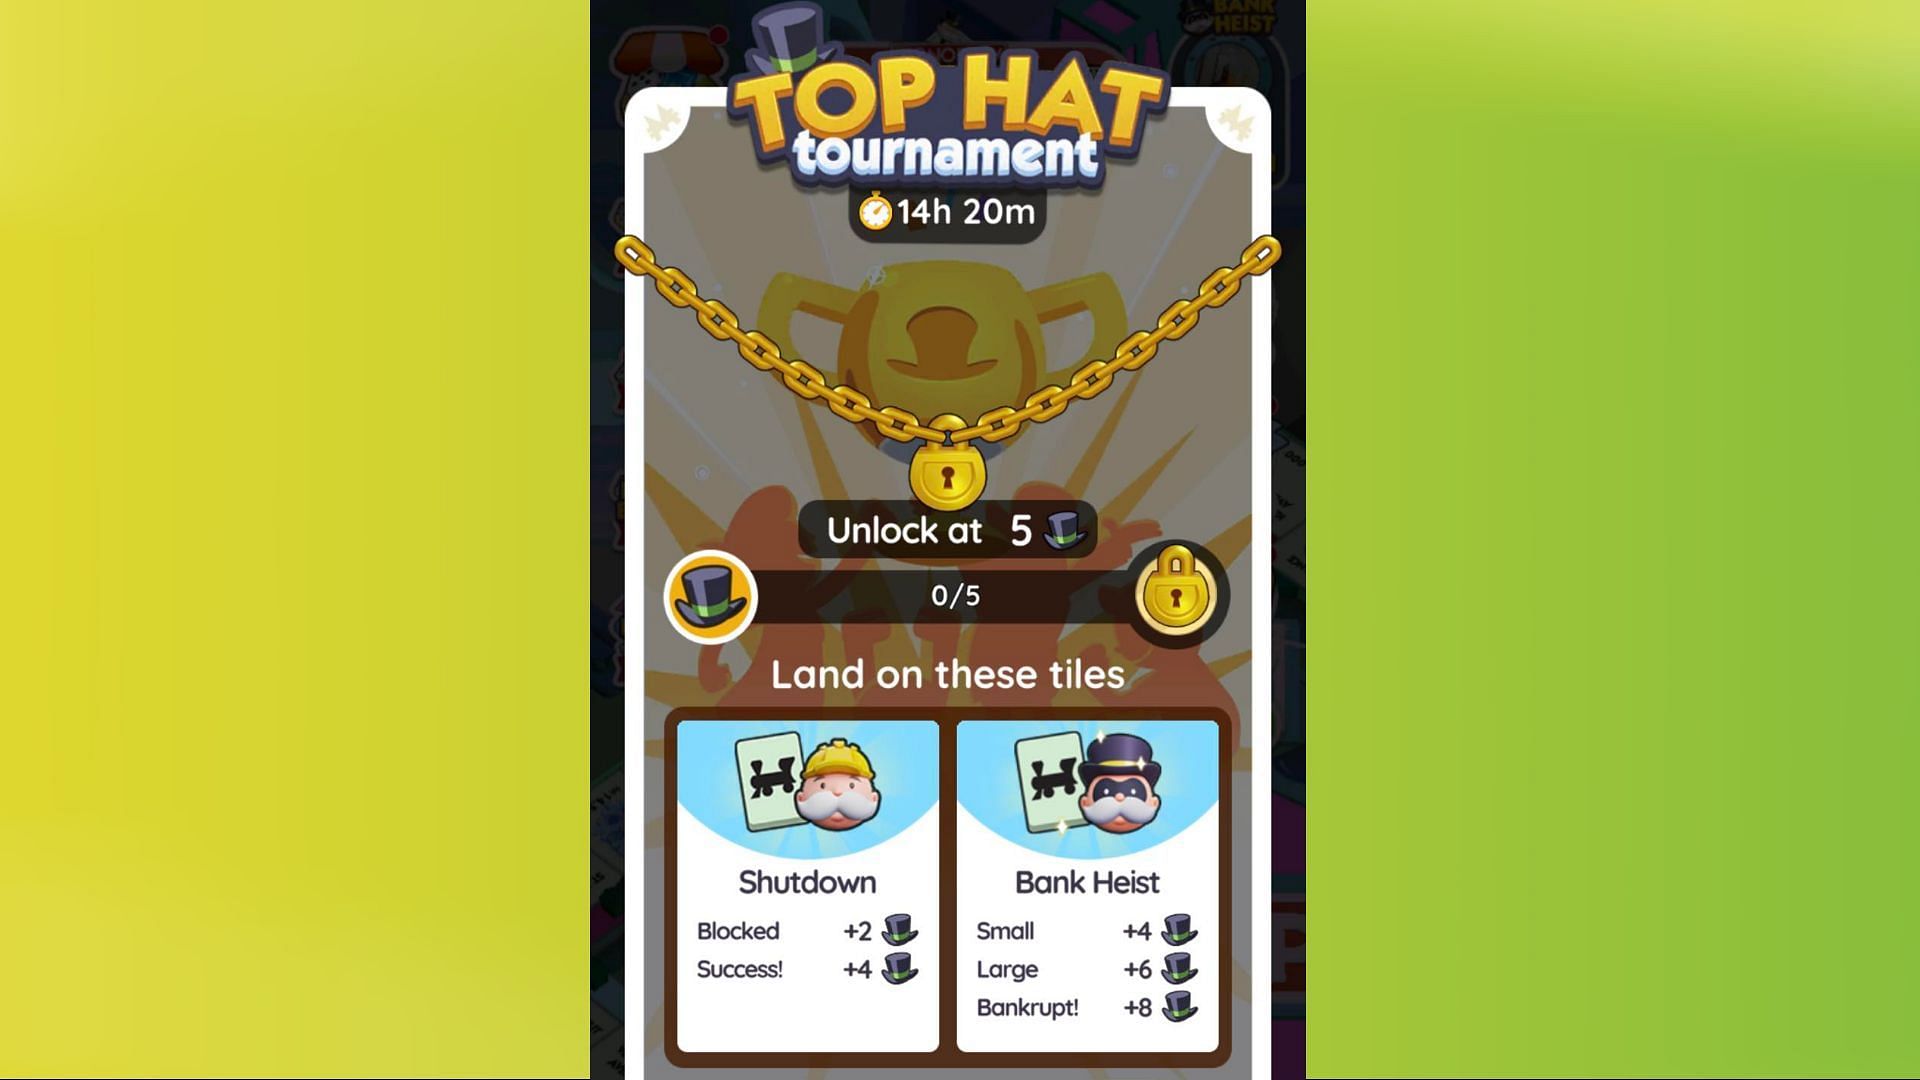 Top Hat tournament scoring system (Image via Scopely)